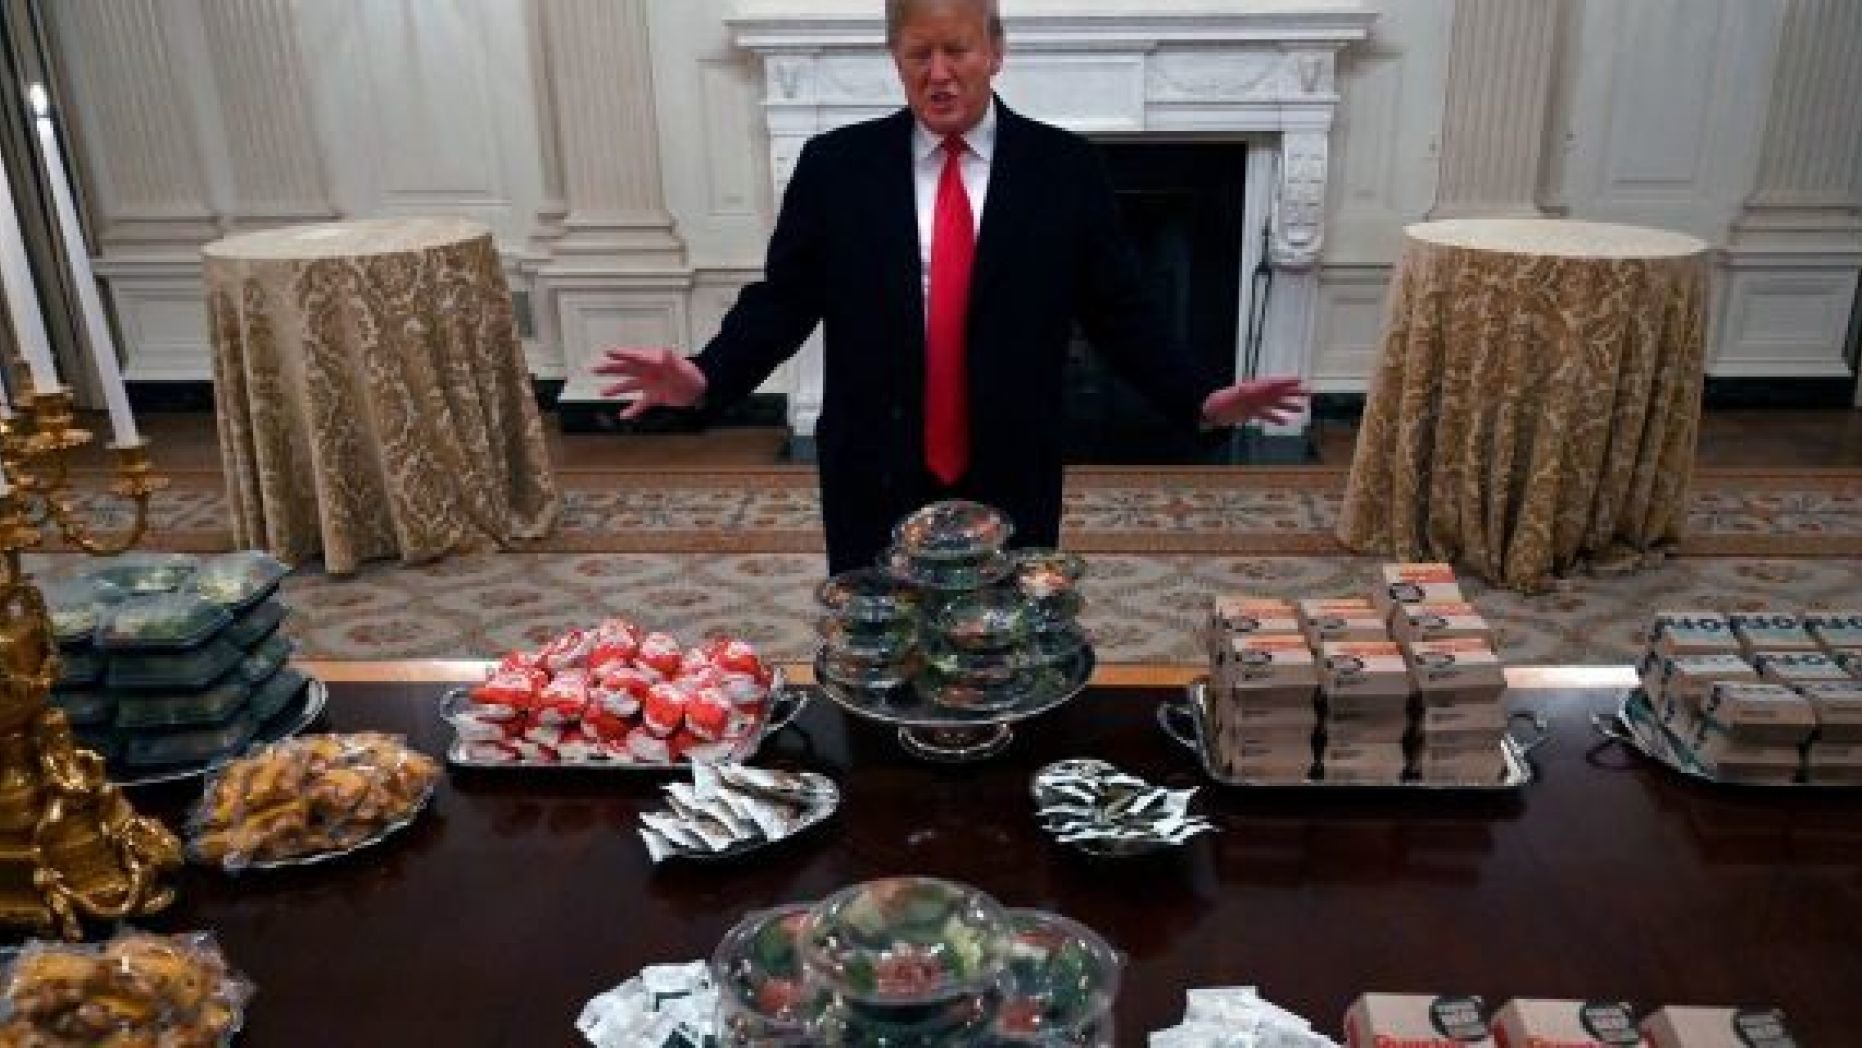 Trump fast food.jpg  by pjaye2000